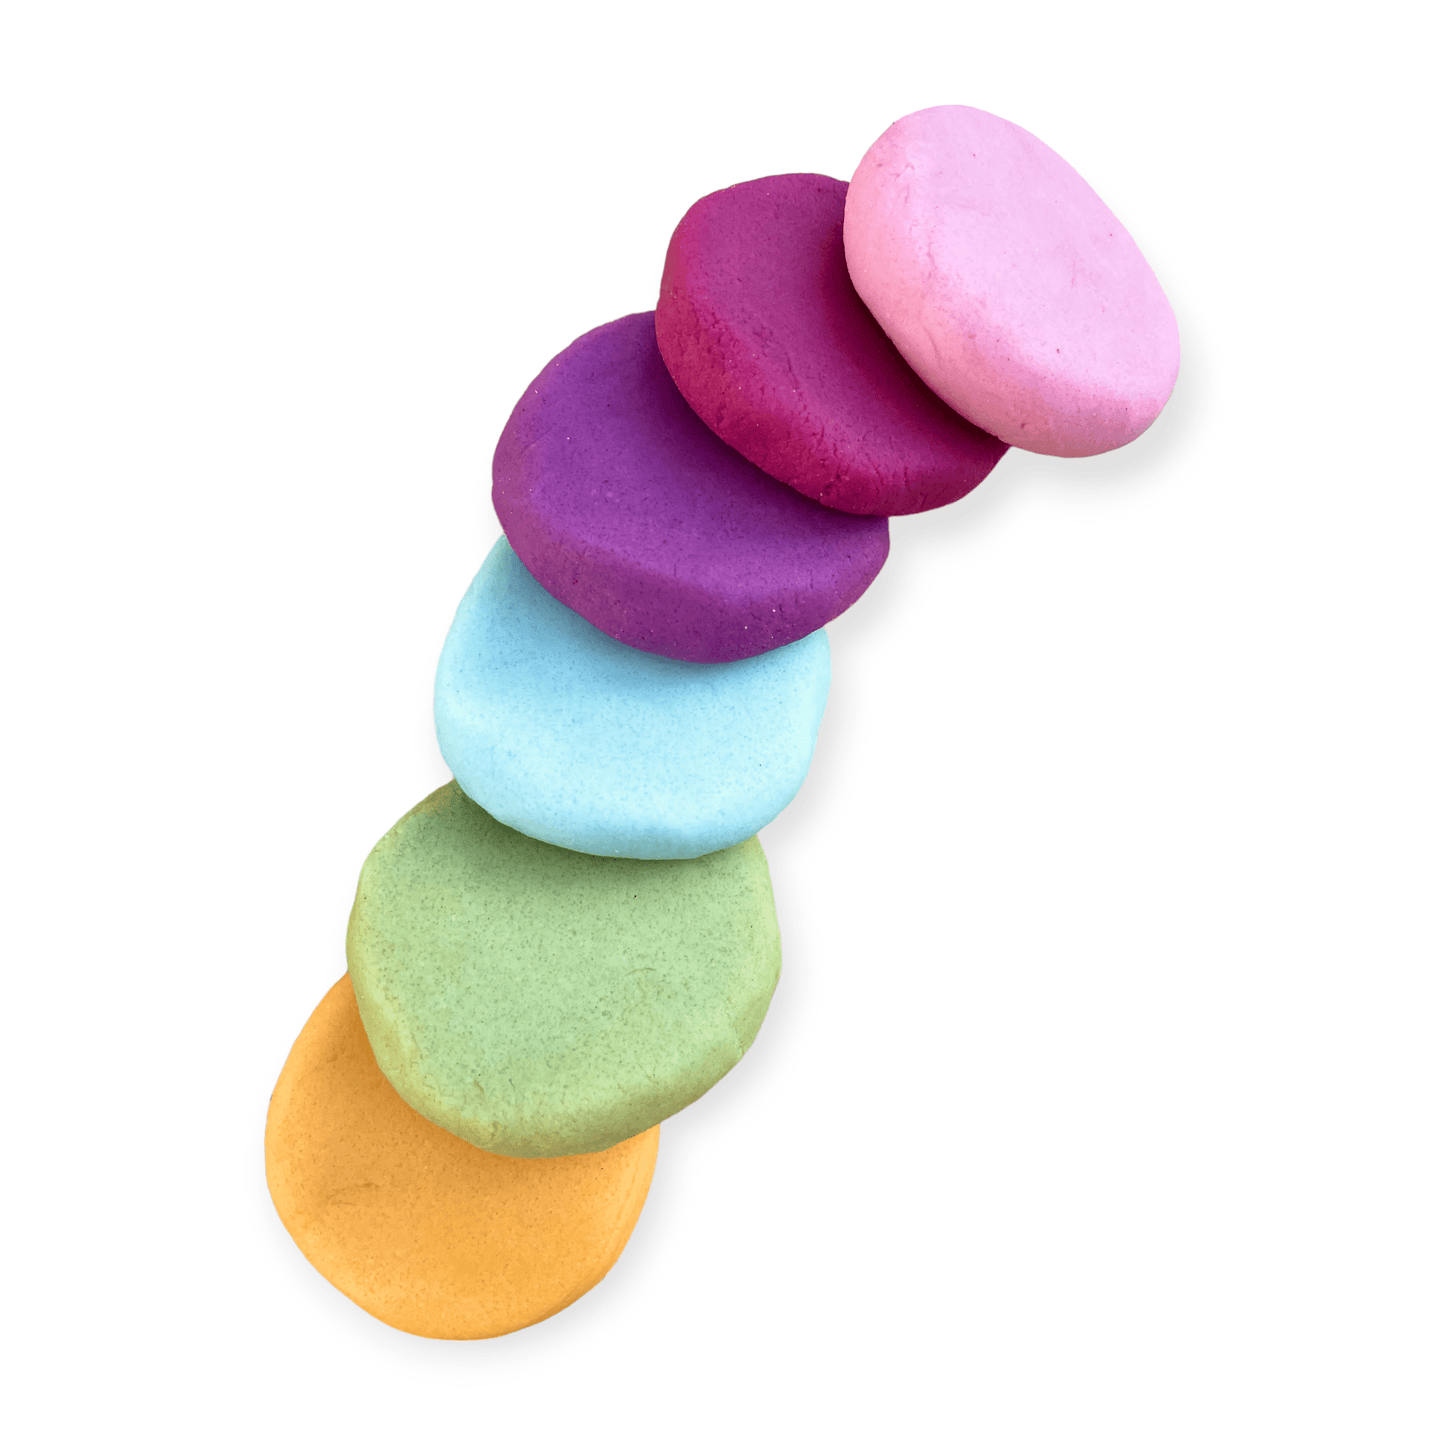 Organic Sensory Dough 4-Pack (Pink) - Colorful Dough for Engaging Imaginative Play